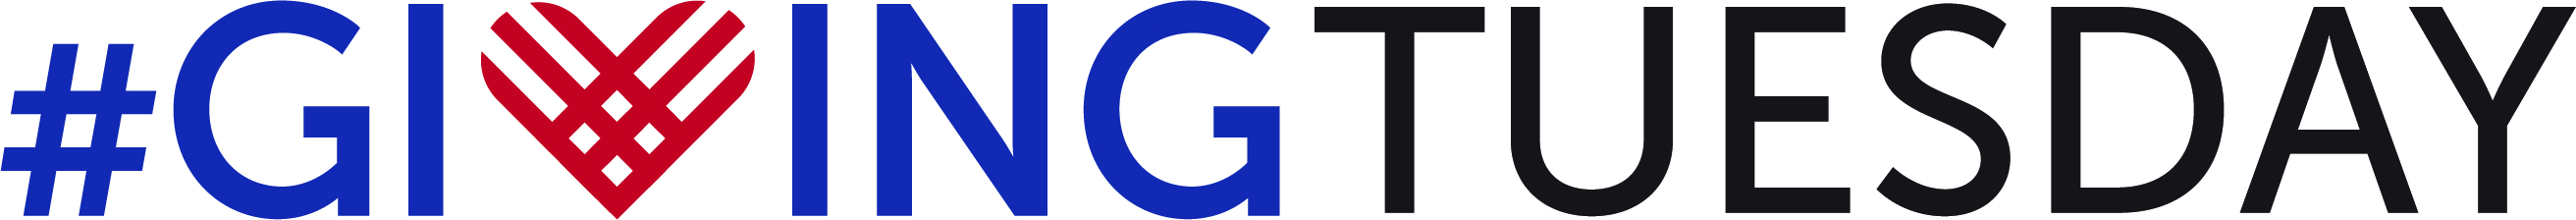 1 GT_logo